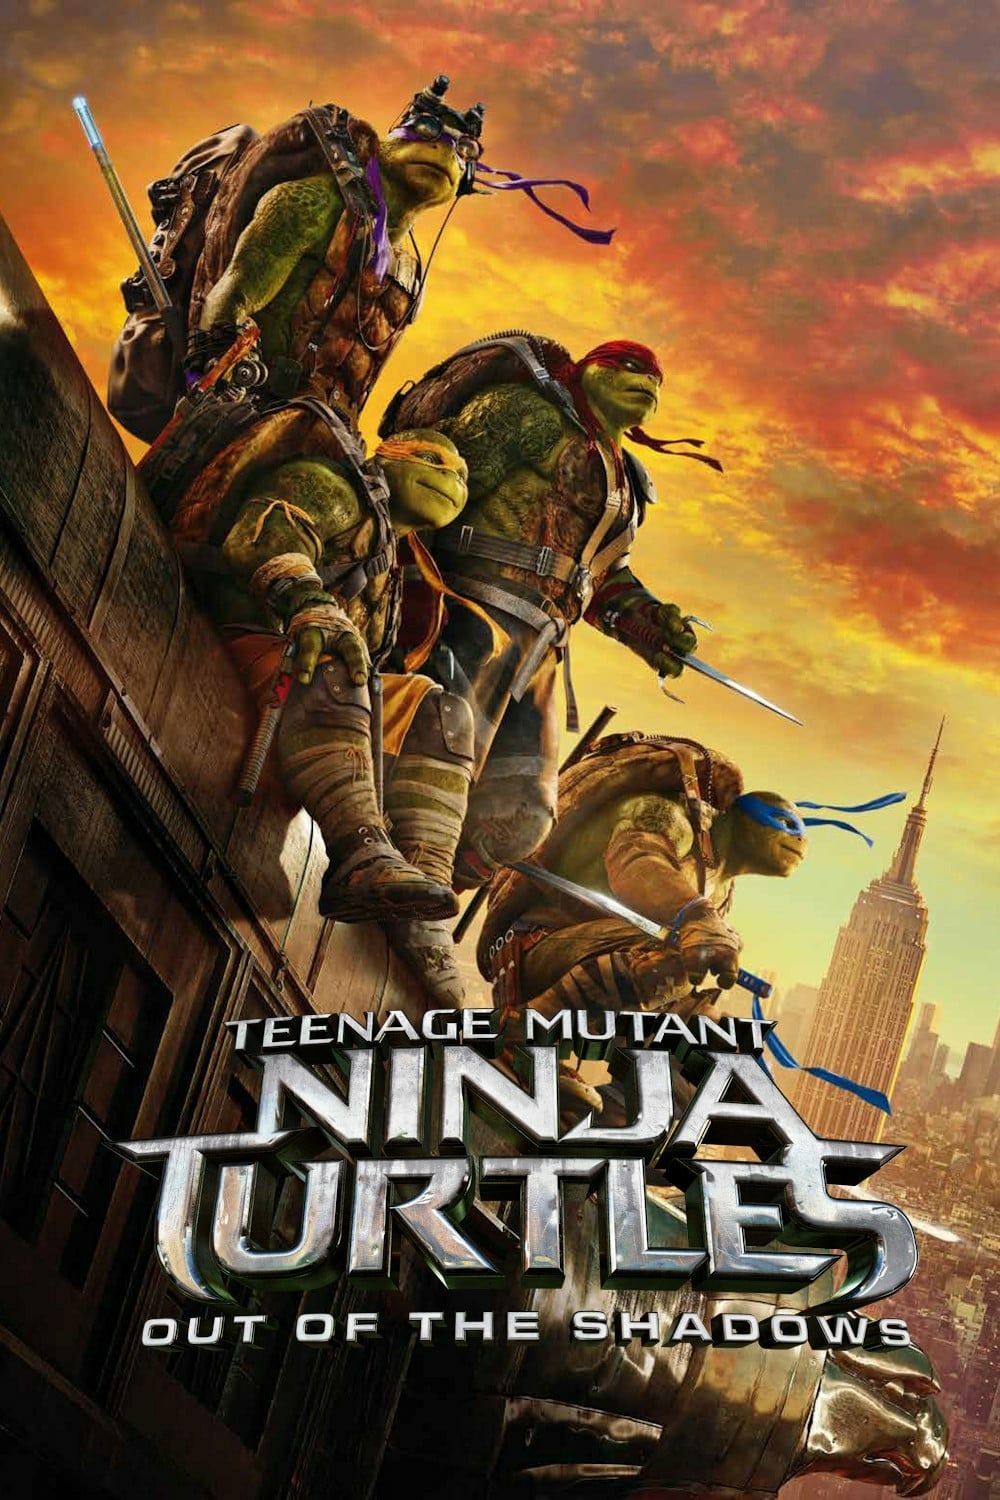 Teenage Mutant Ninja Turtles Out of the Shadows PG13 Guide